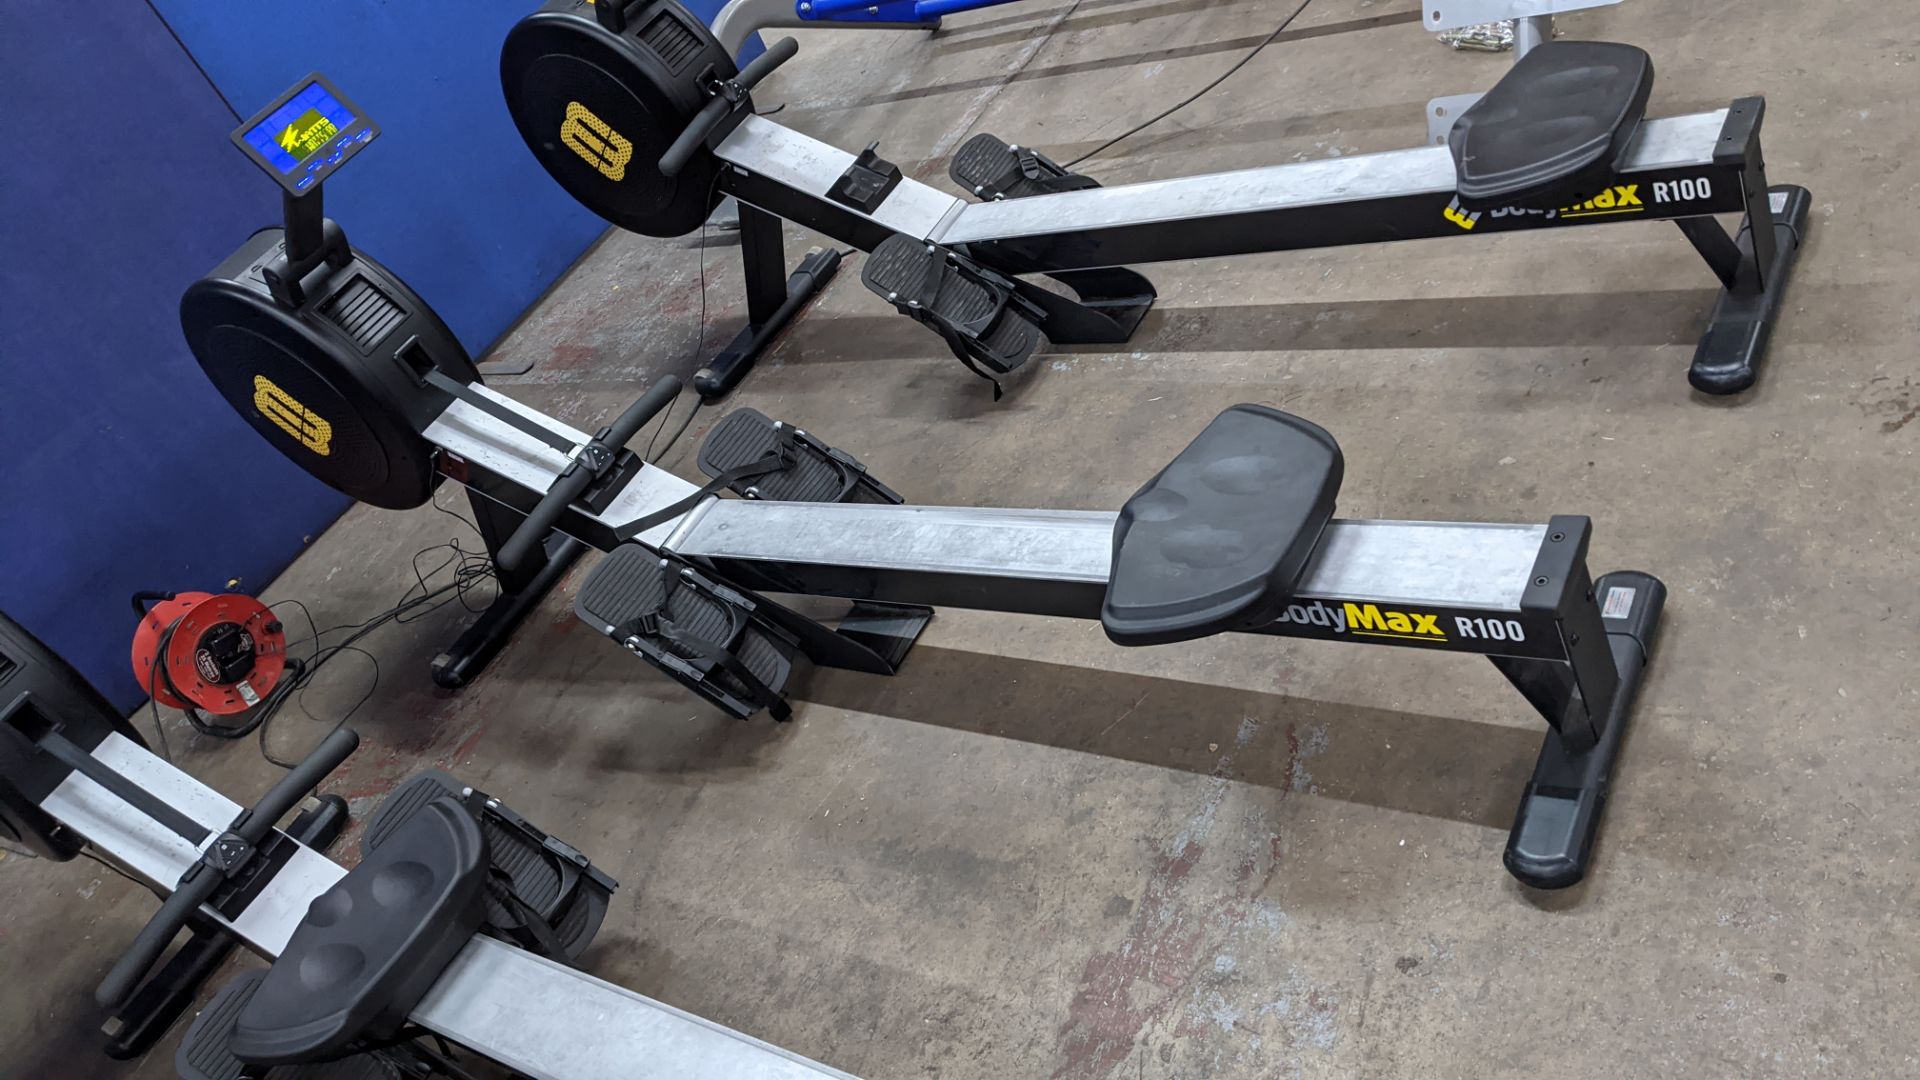 BodyMax R100 rowing machine - Image 2 of 10